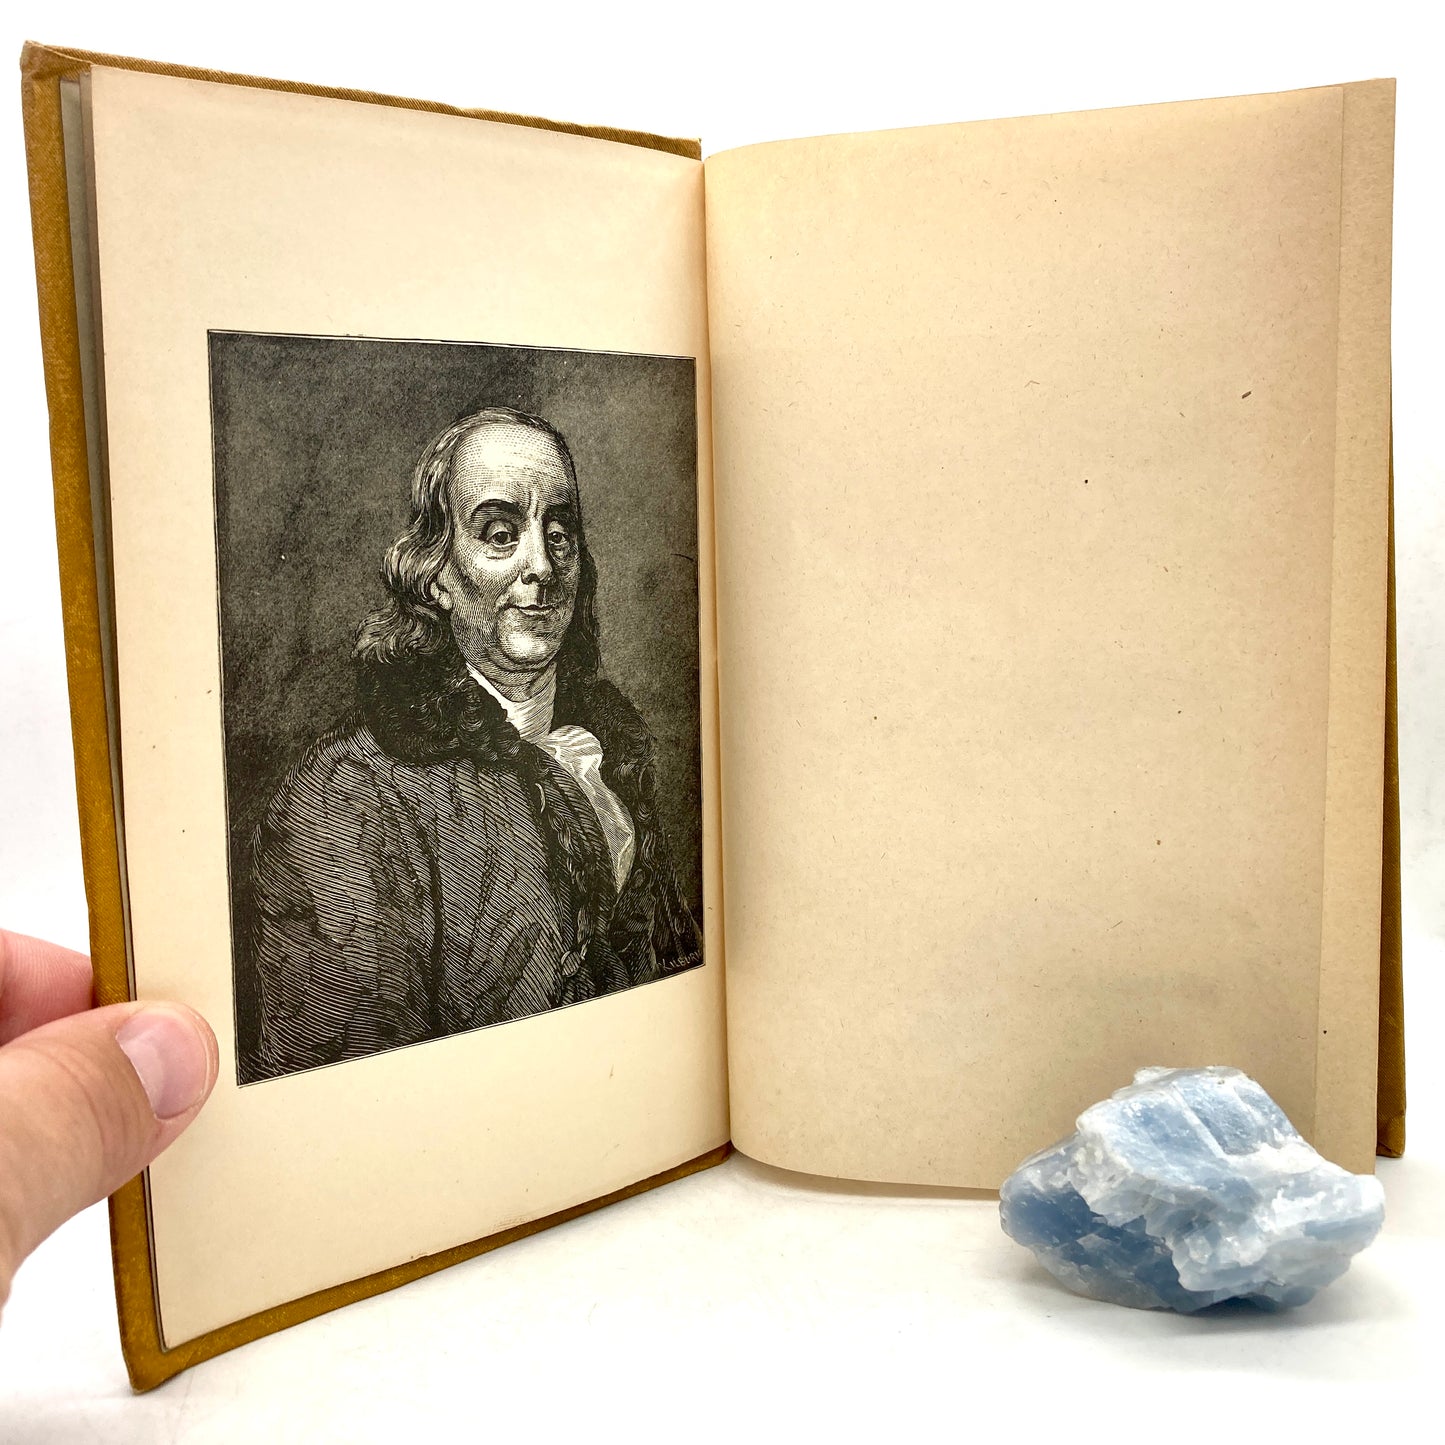 CHAPLIN, Jeremiah "The Life of Benjamin Franklin" [D. Lothrop, 1876]